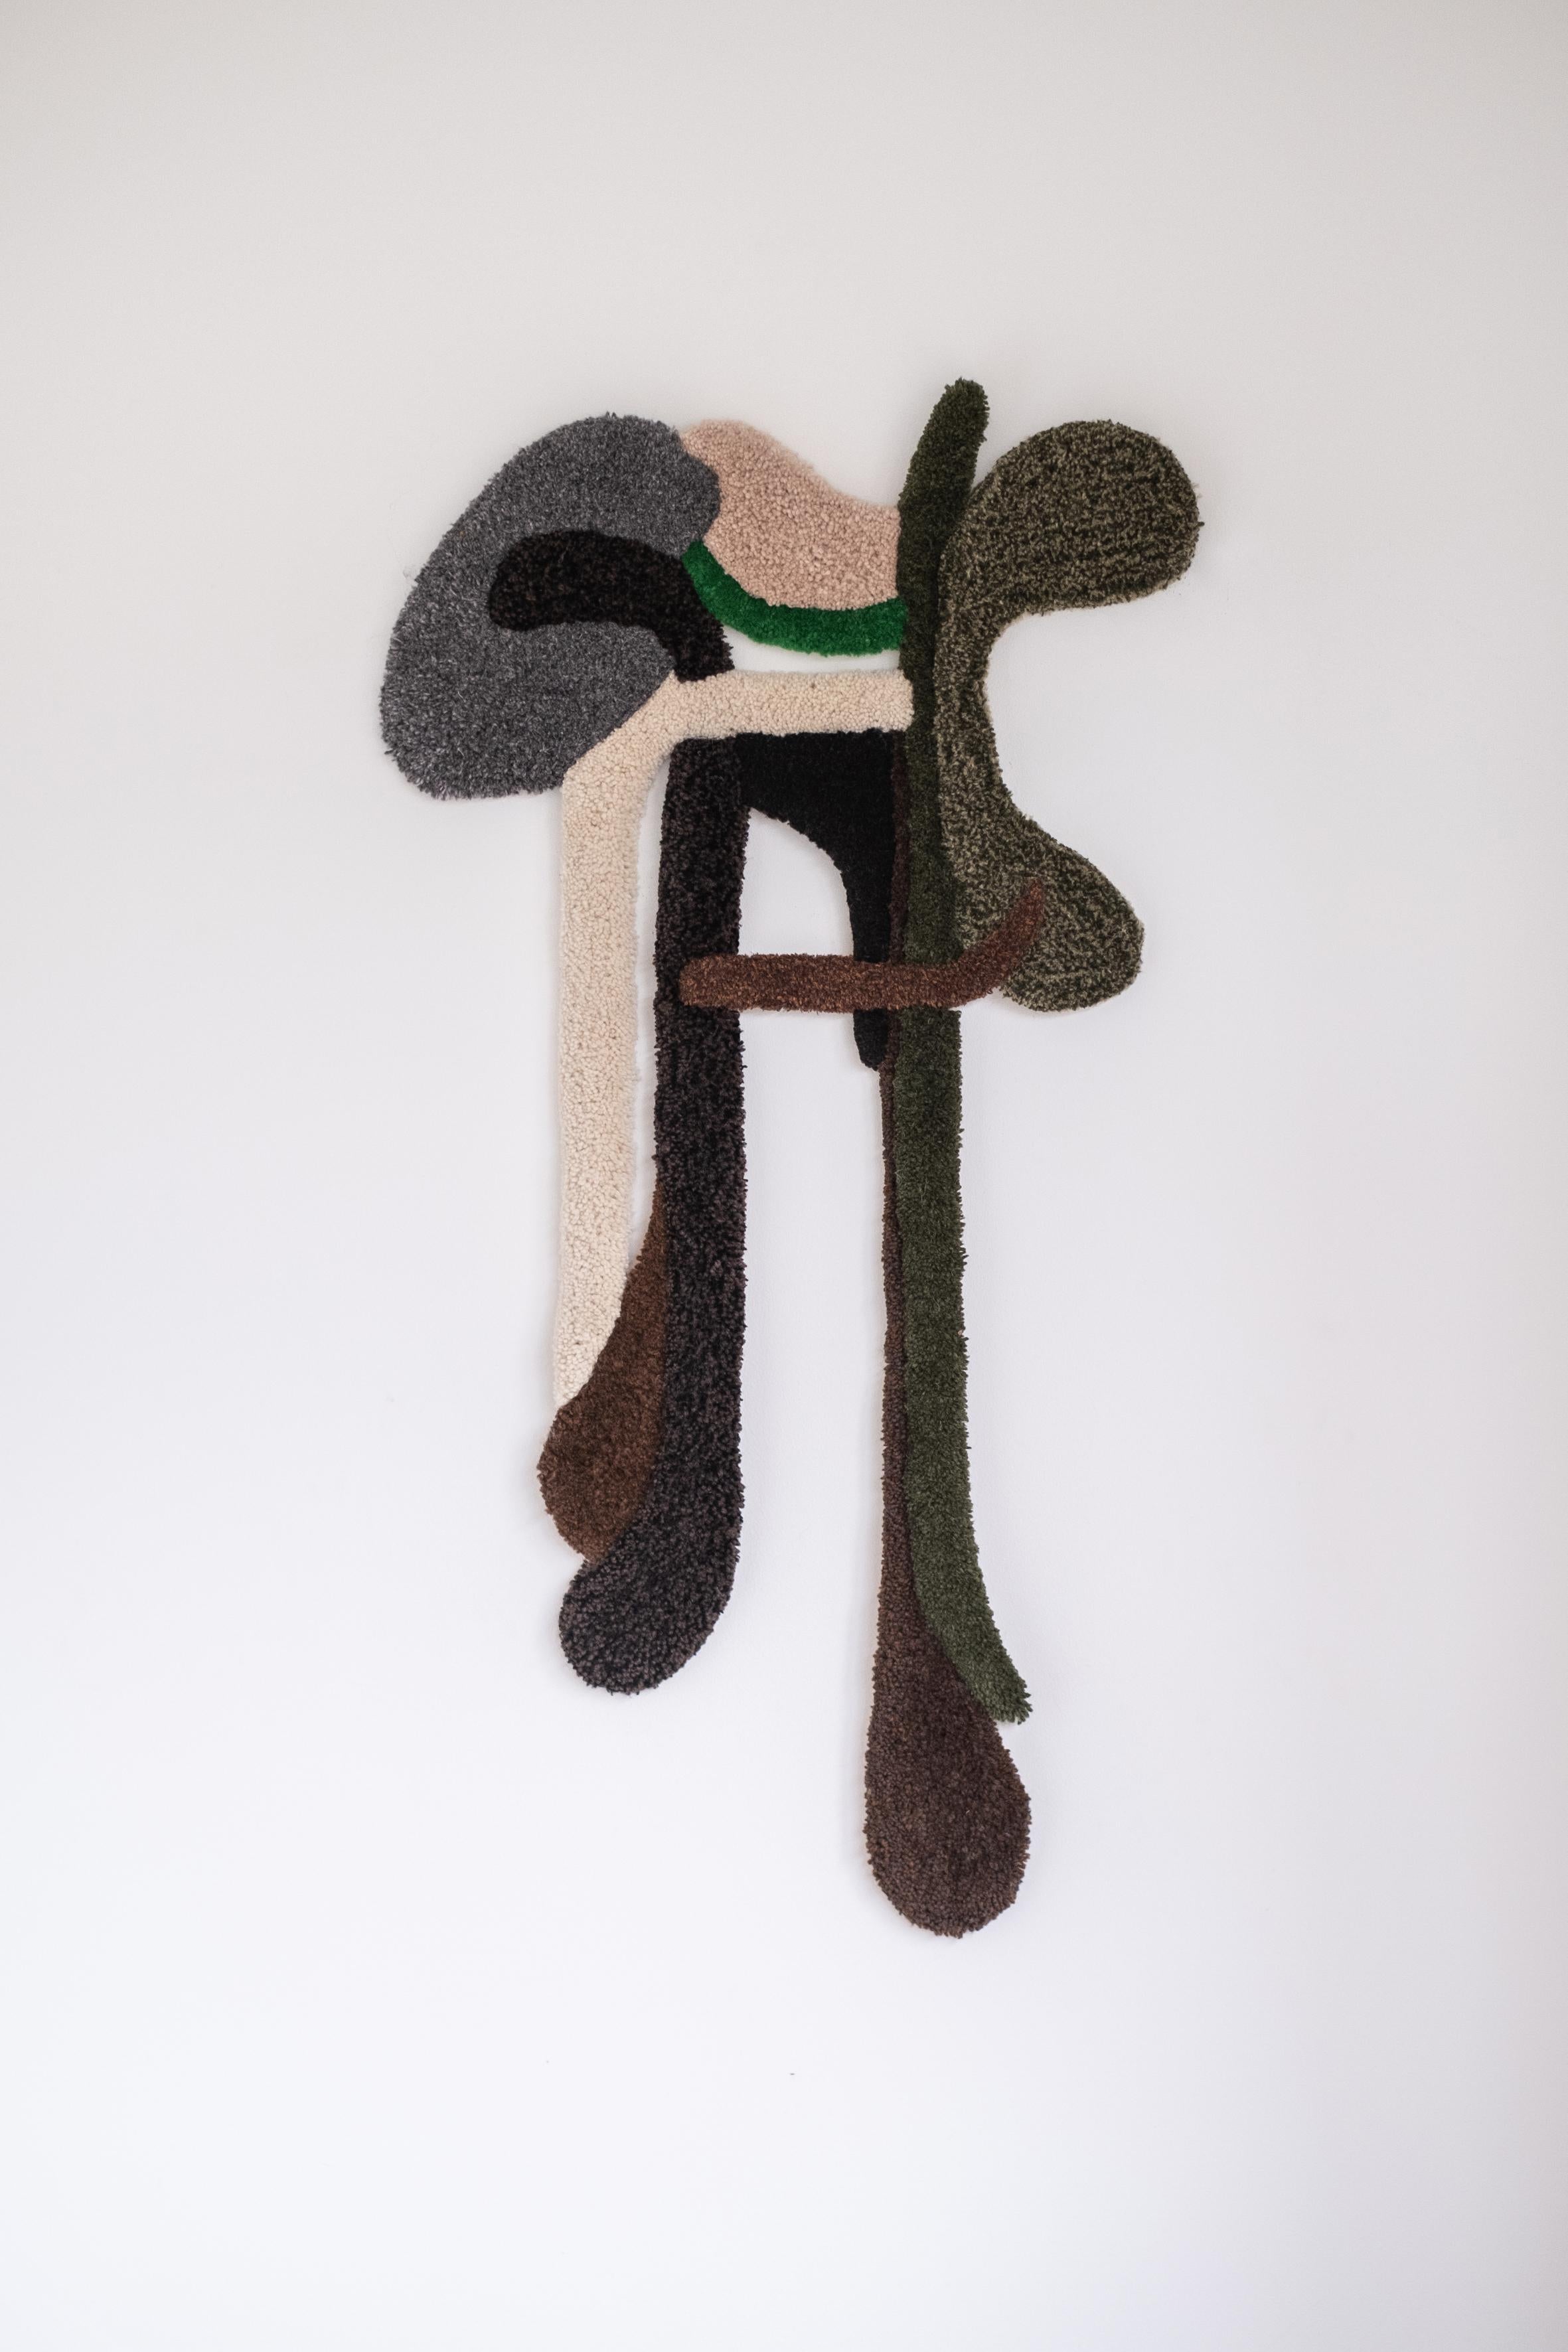 Belgian Opus XLIII Handmade Wool Tapestry by Mira Sohlen